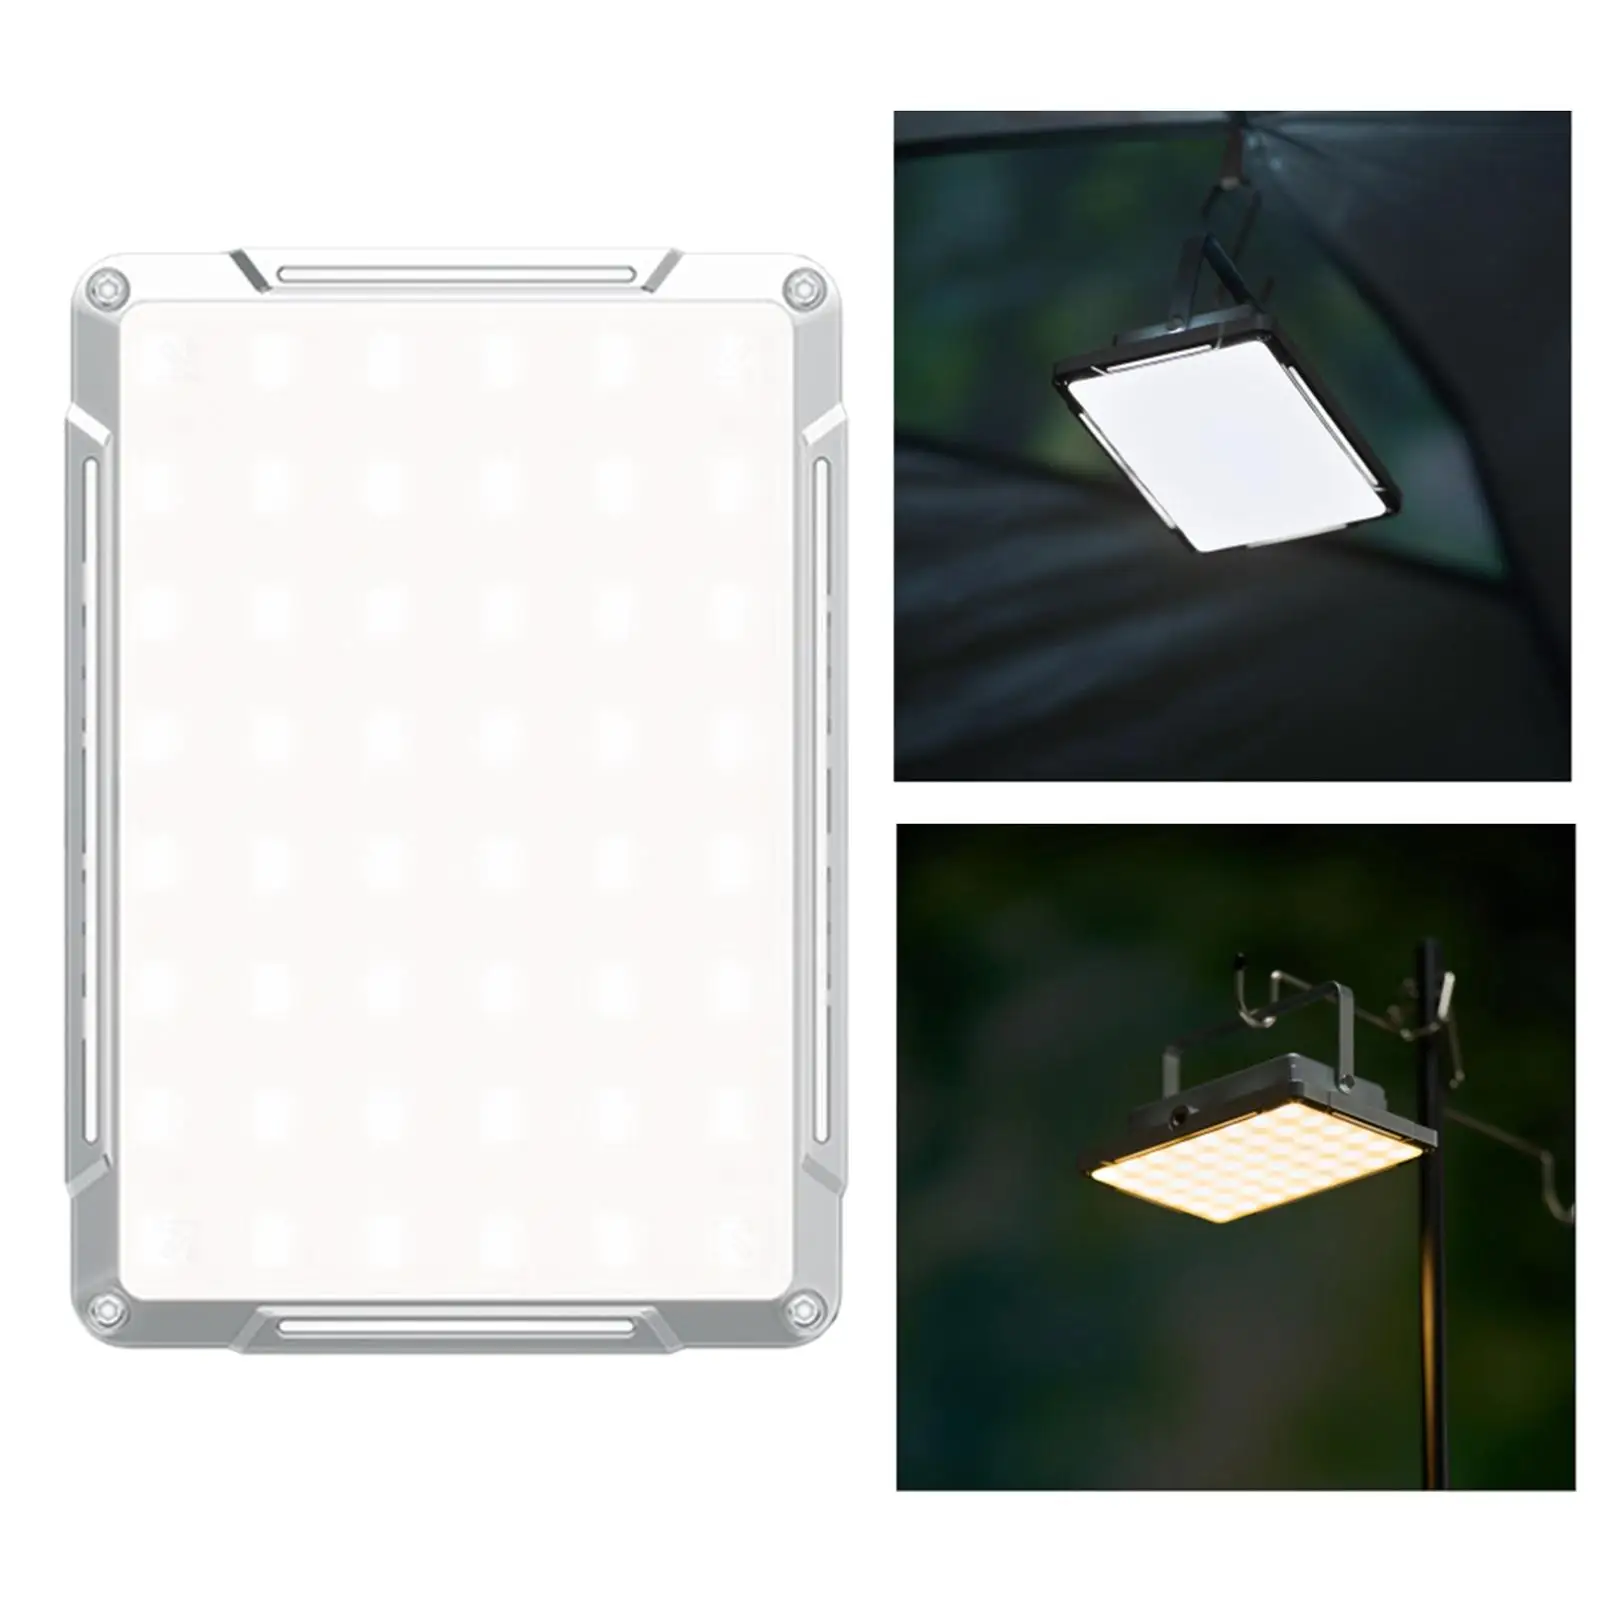 Modern Hanging Garden Lamp Outdoor USB Rechargeable Lighting Fixture light for Garden BBQ Fishing Hiking Home